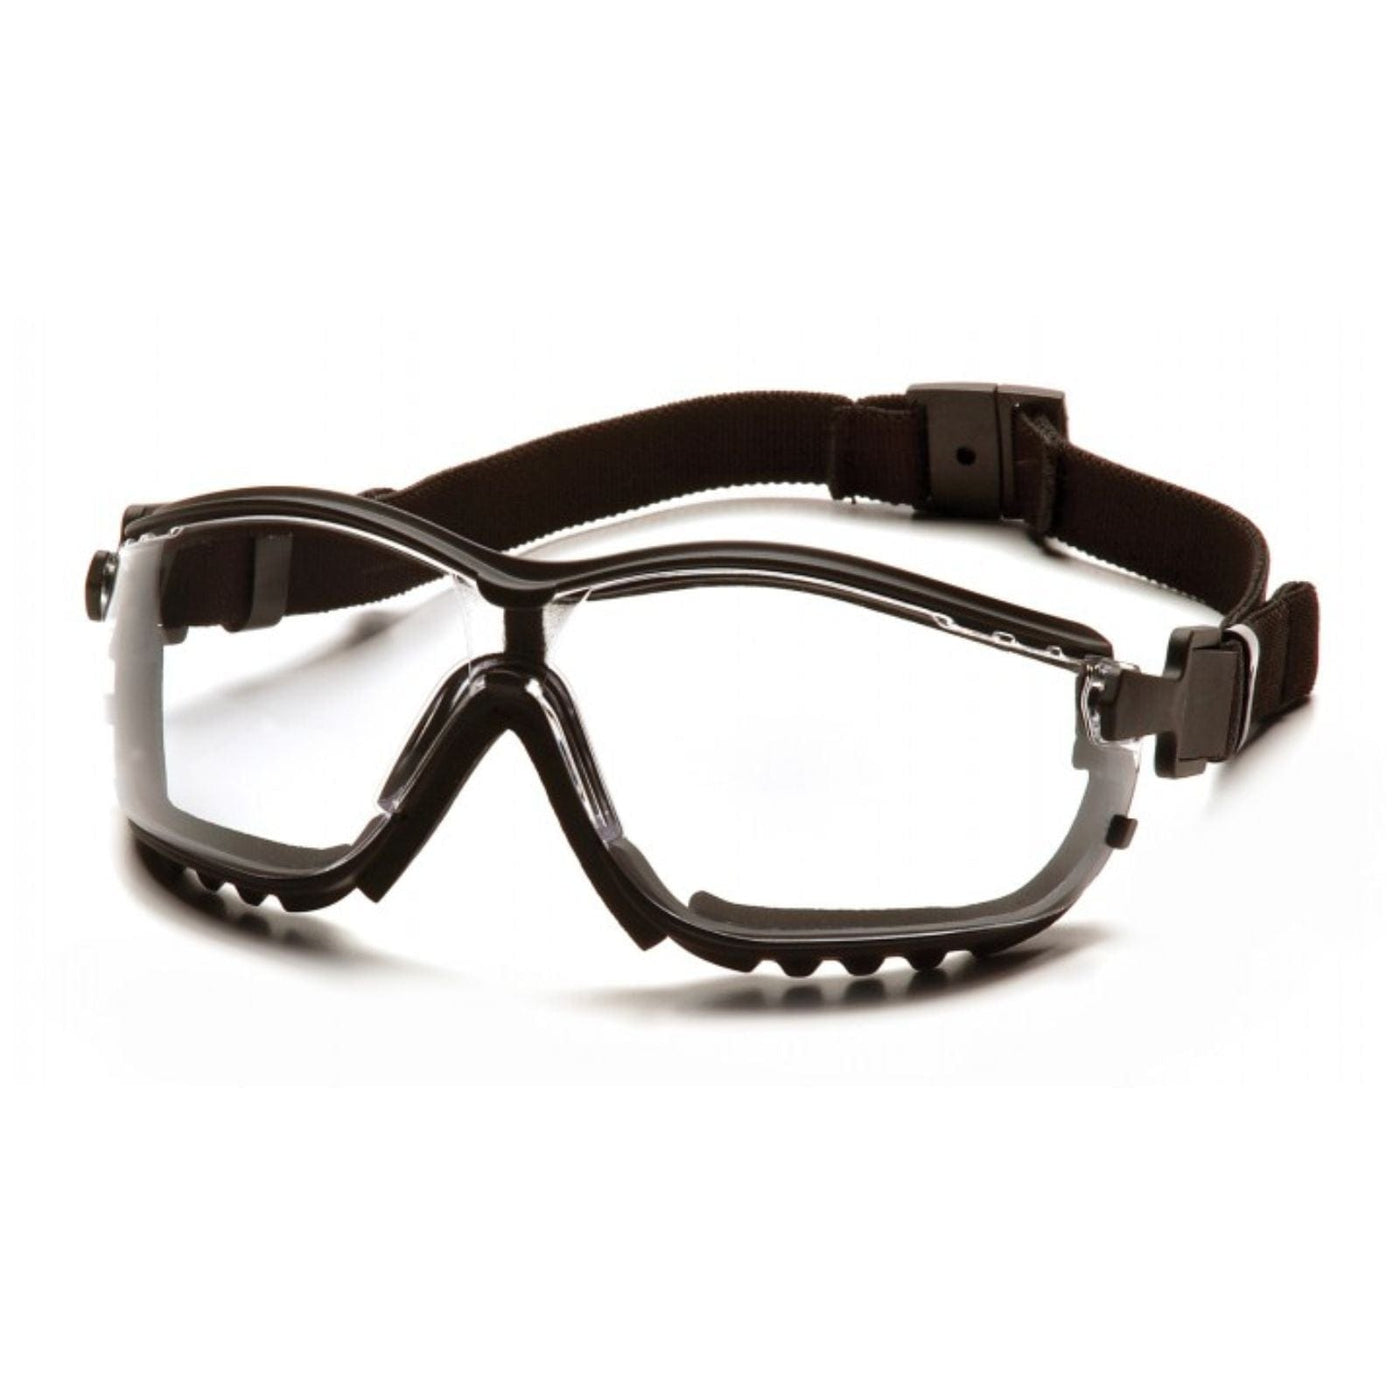 PYRAMEX SAFETY PRODUCTS Pyramex V2G Safety Glasses Black Frame Clear Anti-Fog Lens Apparel